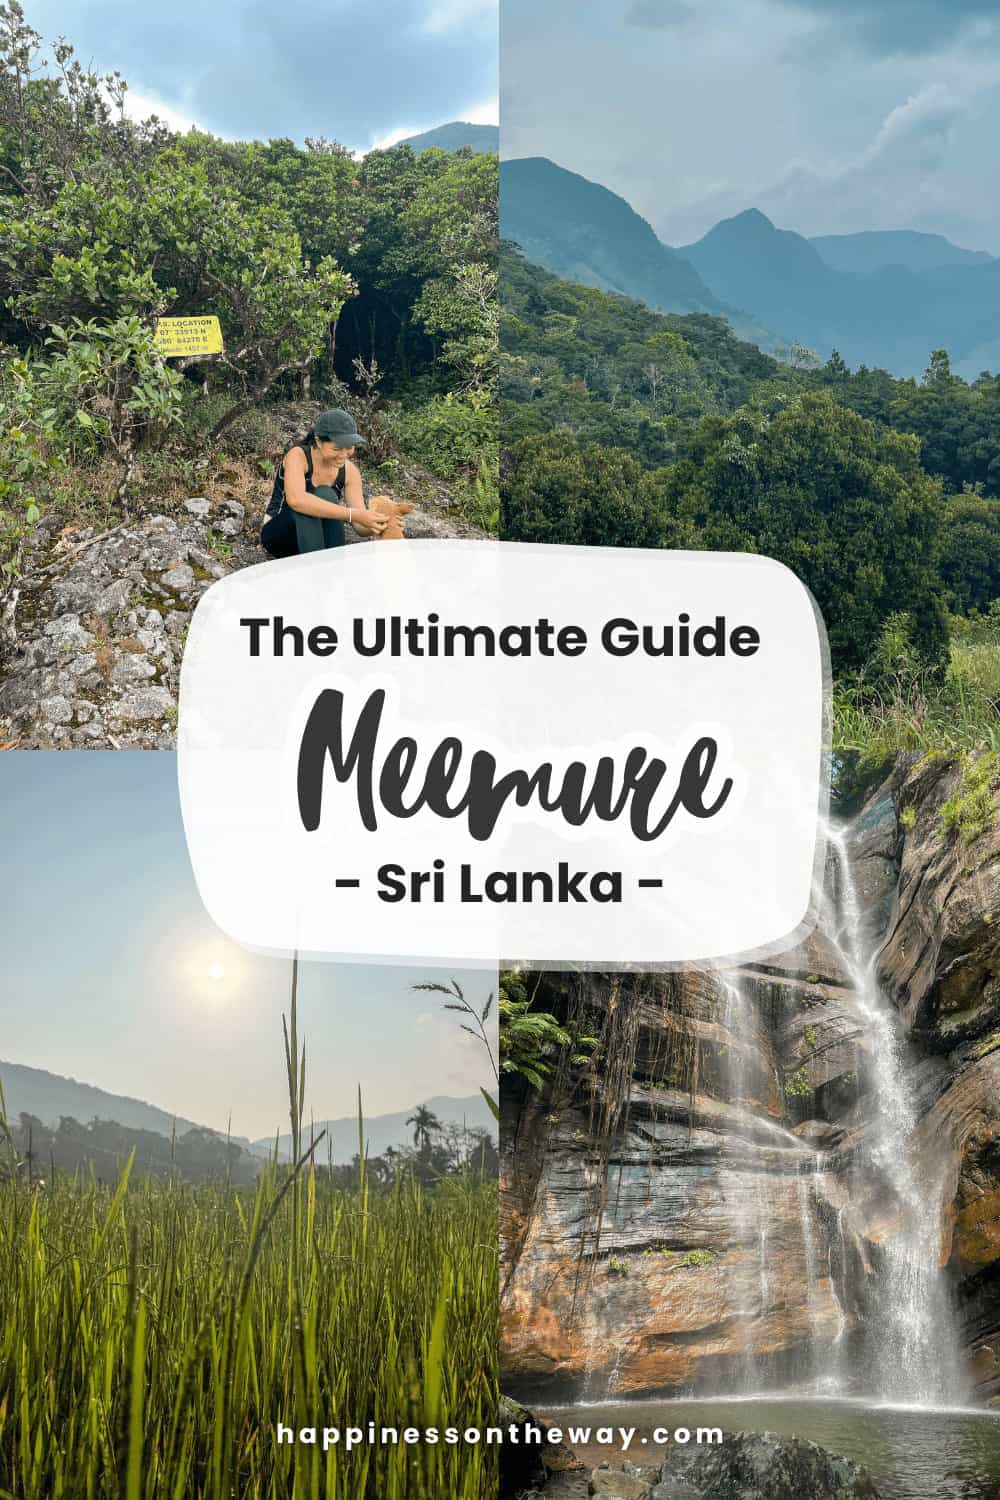 The Ultimate Guide Meemure